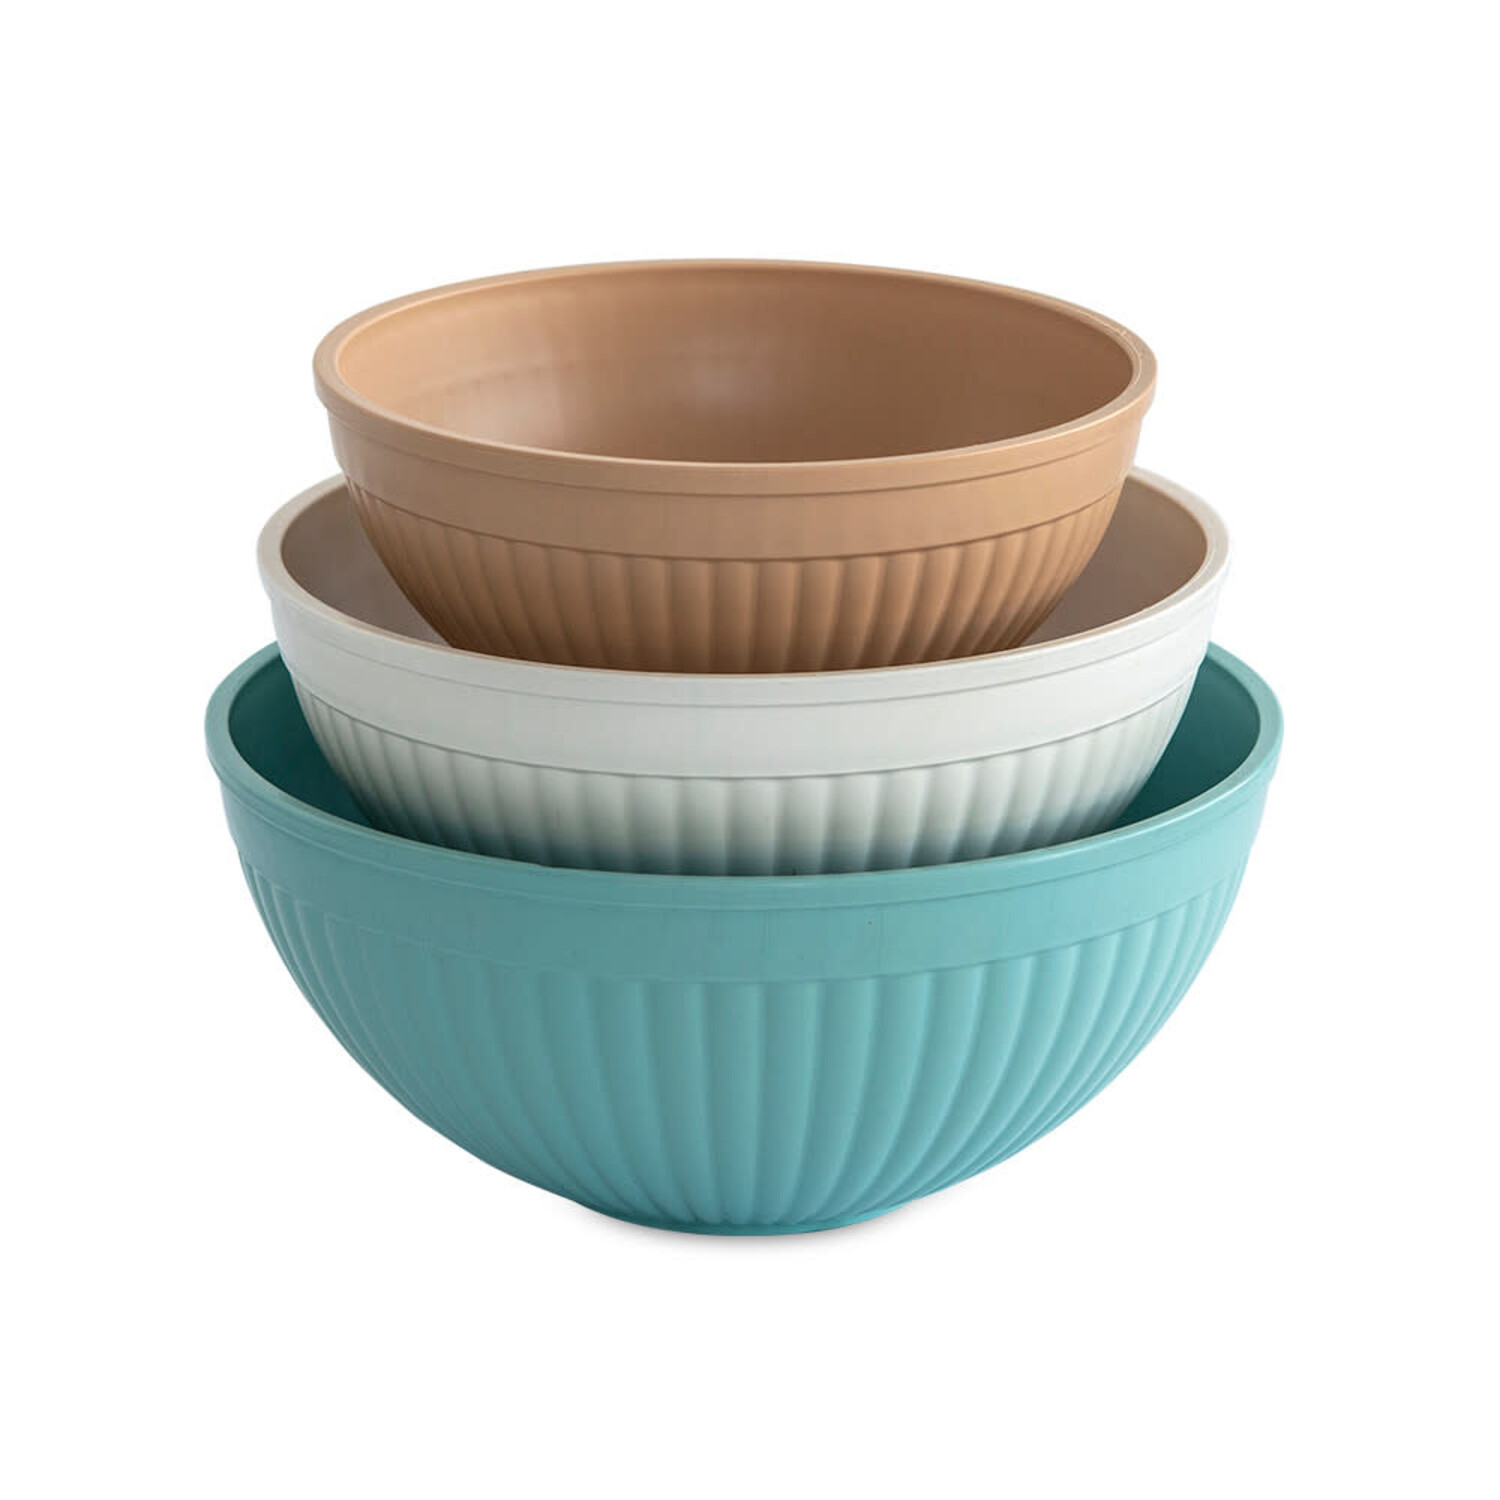 https://cdn.shoplightspeed.com/shops/633447/files/55181783/1500x4000x3/nordic-ware-taupe-turquoise-white-mixing-bowls-set.jpg